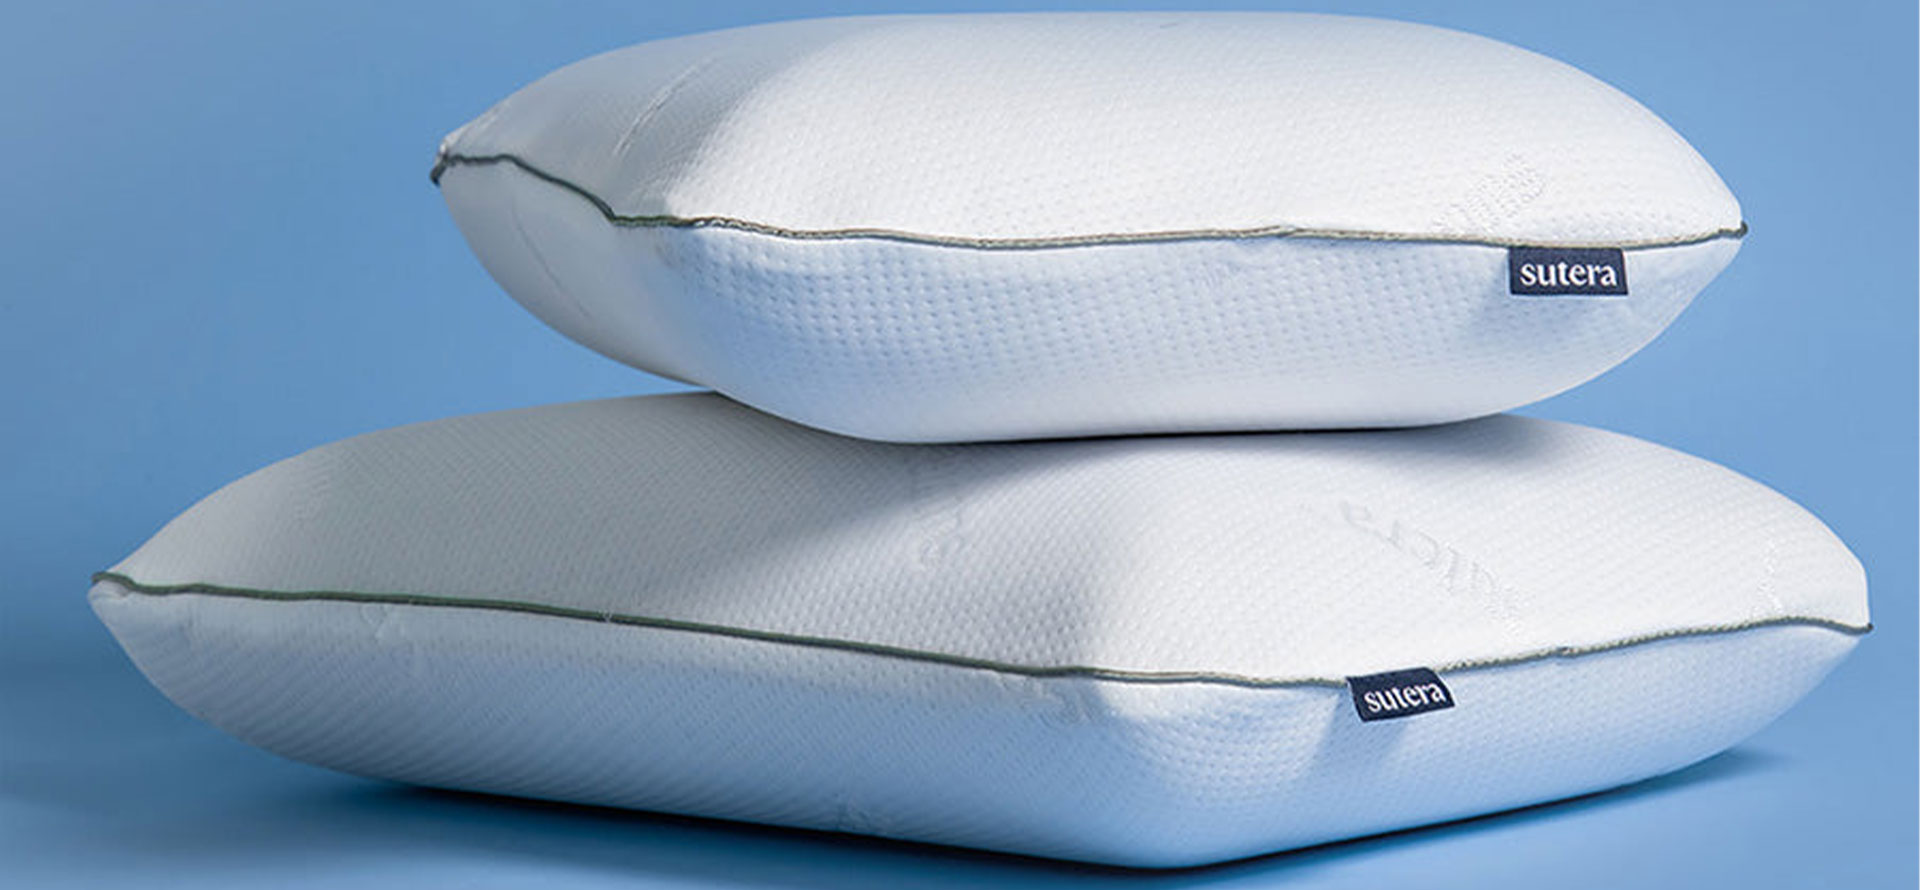 Sutera pillow for sleeping.